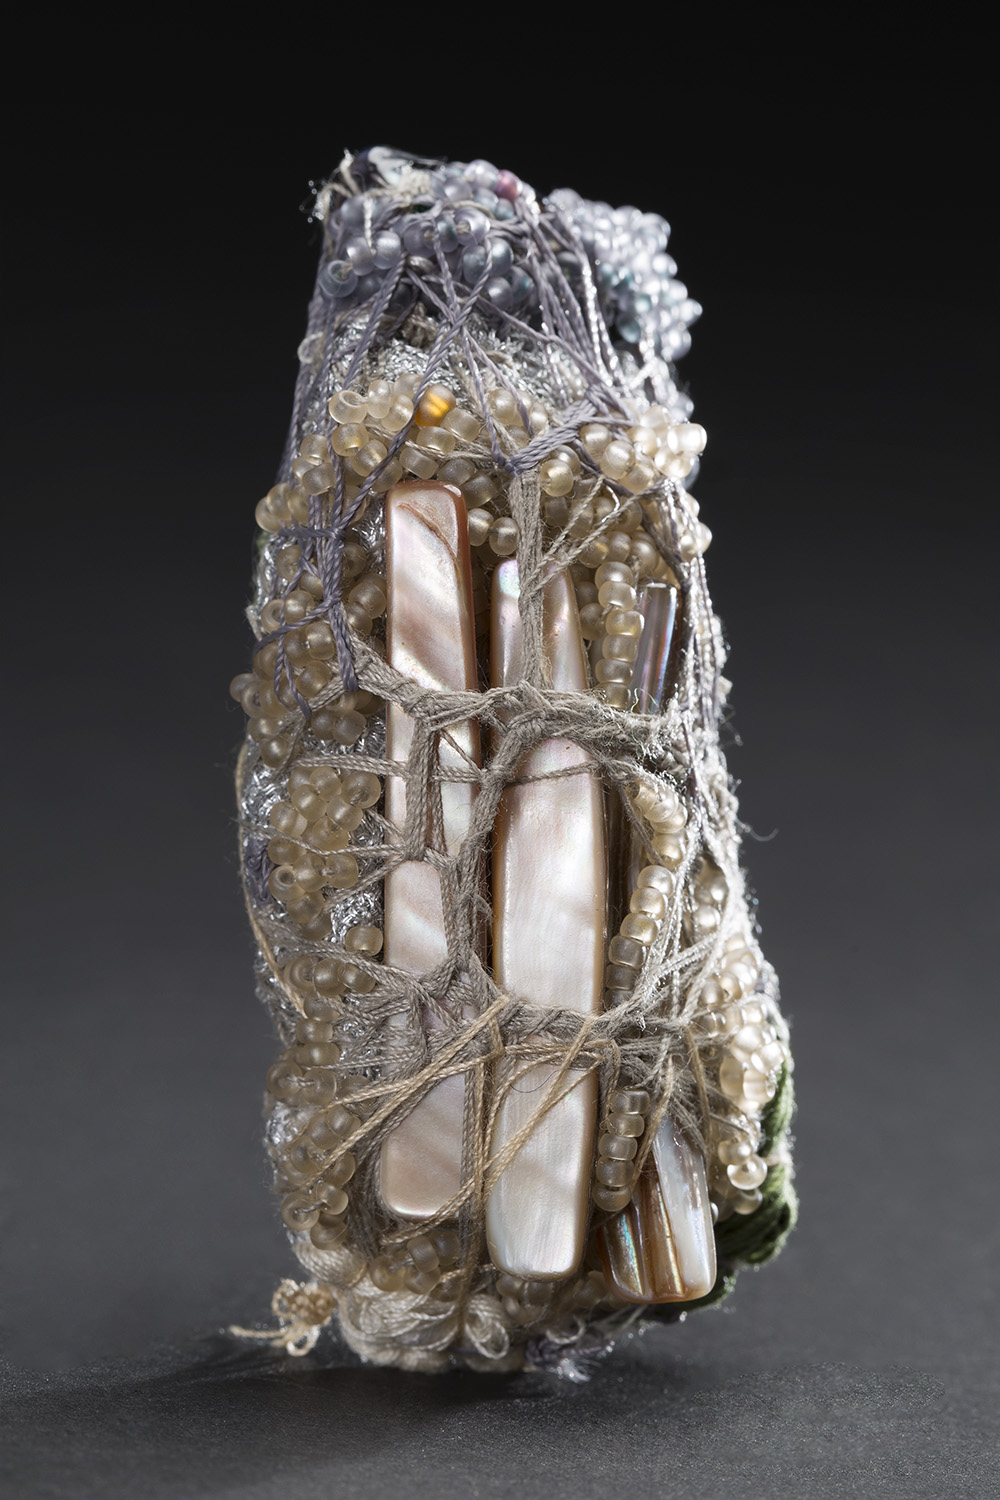  Sandra Sheehy Untitled, 2015 Beads, thread, fabric, buttons, seashells 3 x 1.5 x 1 inches 7.6 x 3.8 x 2.5 cm SSe 91 